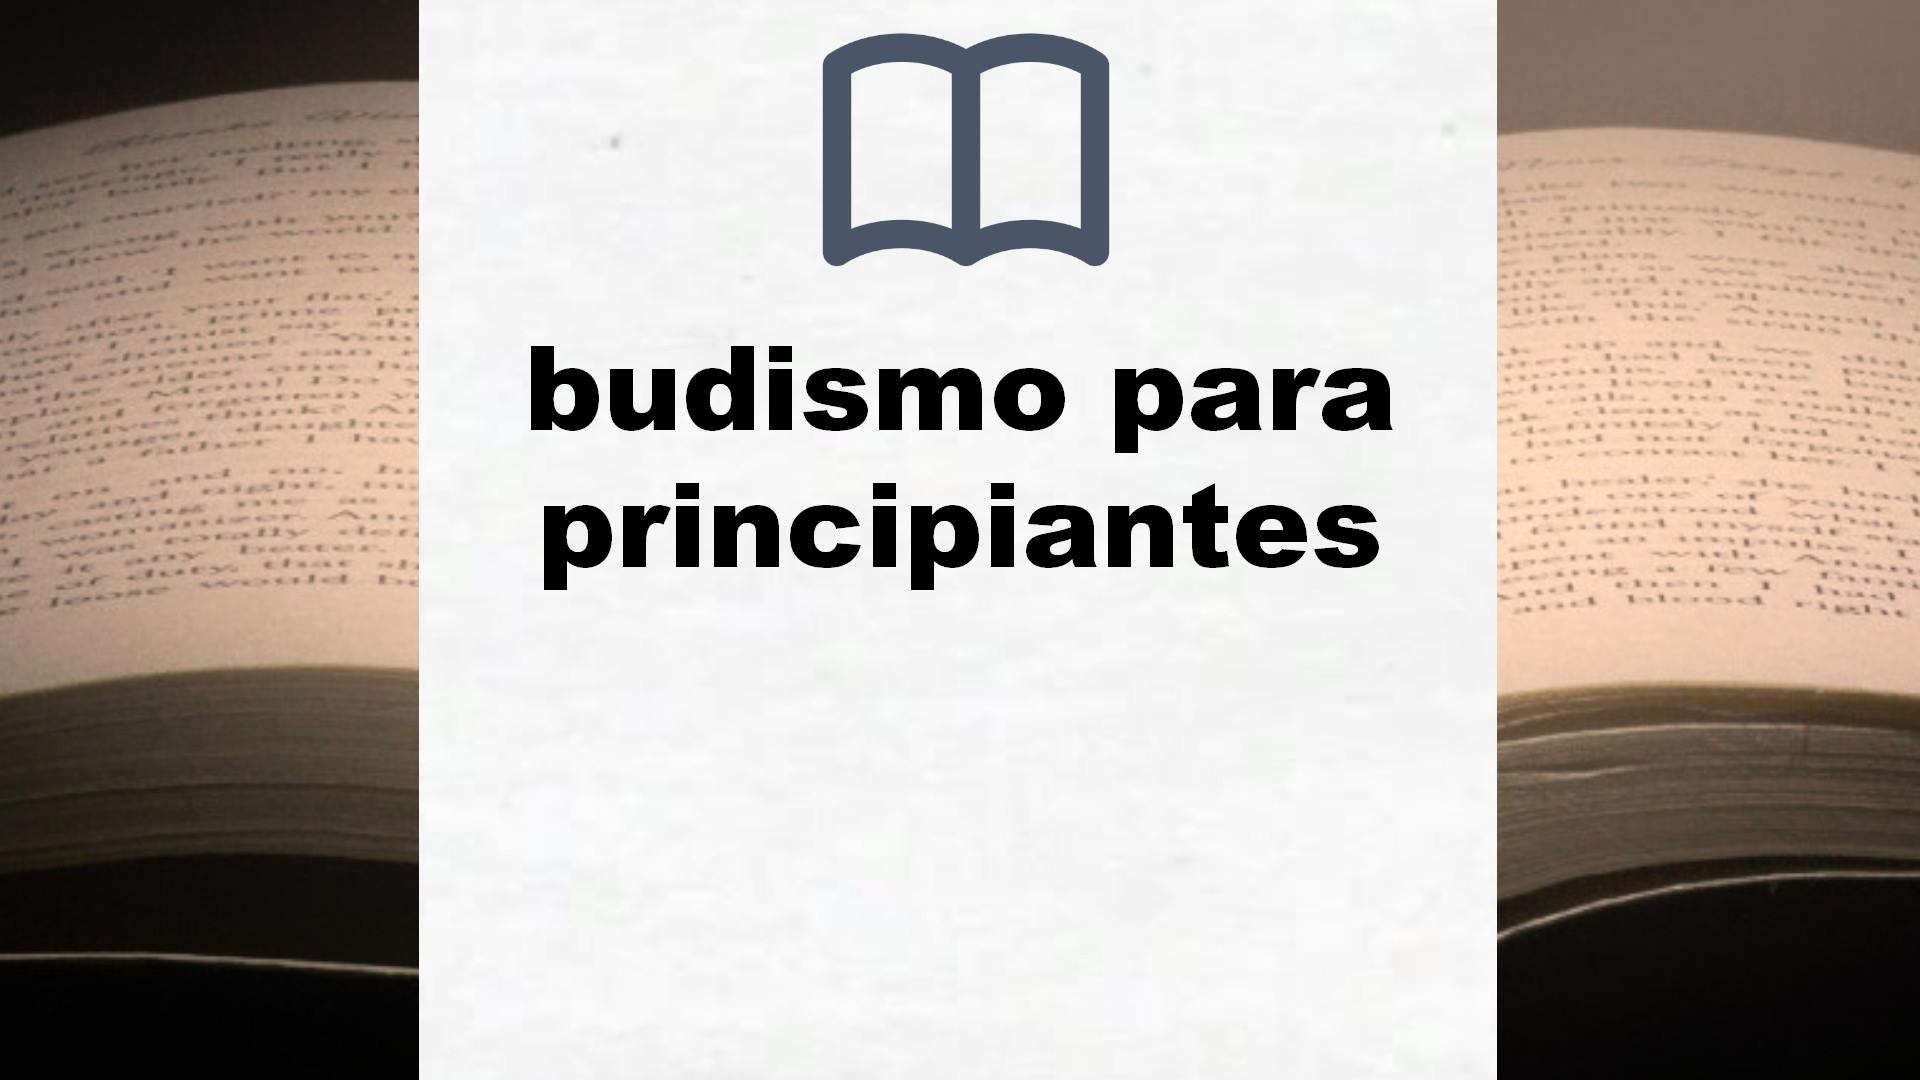 Libros sobre budismo para principiantes